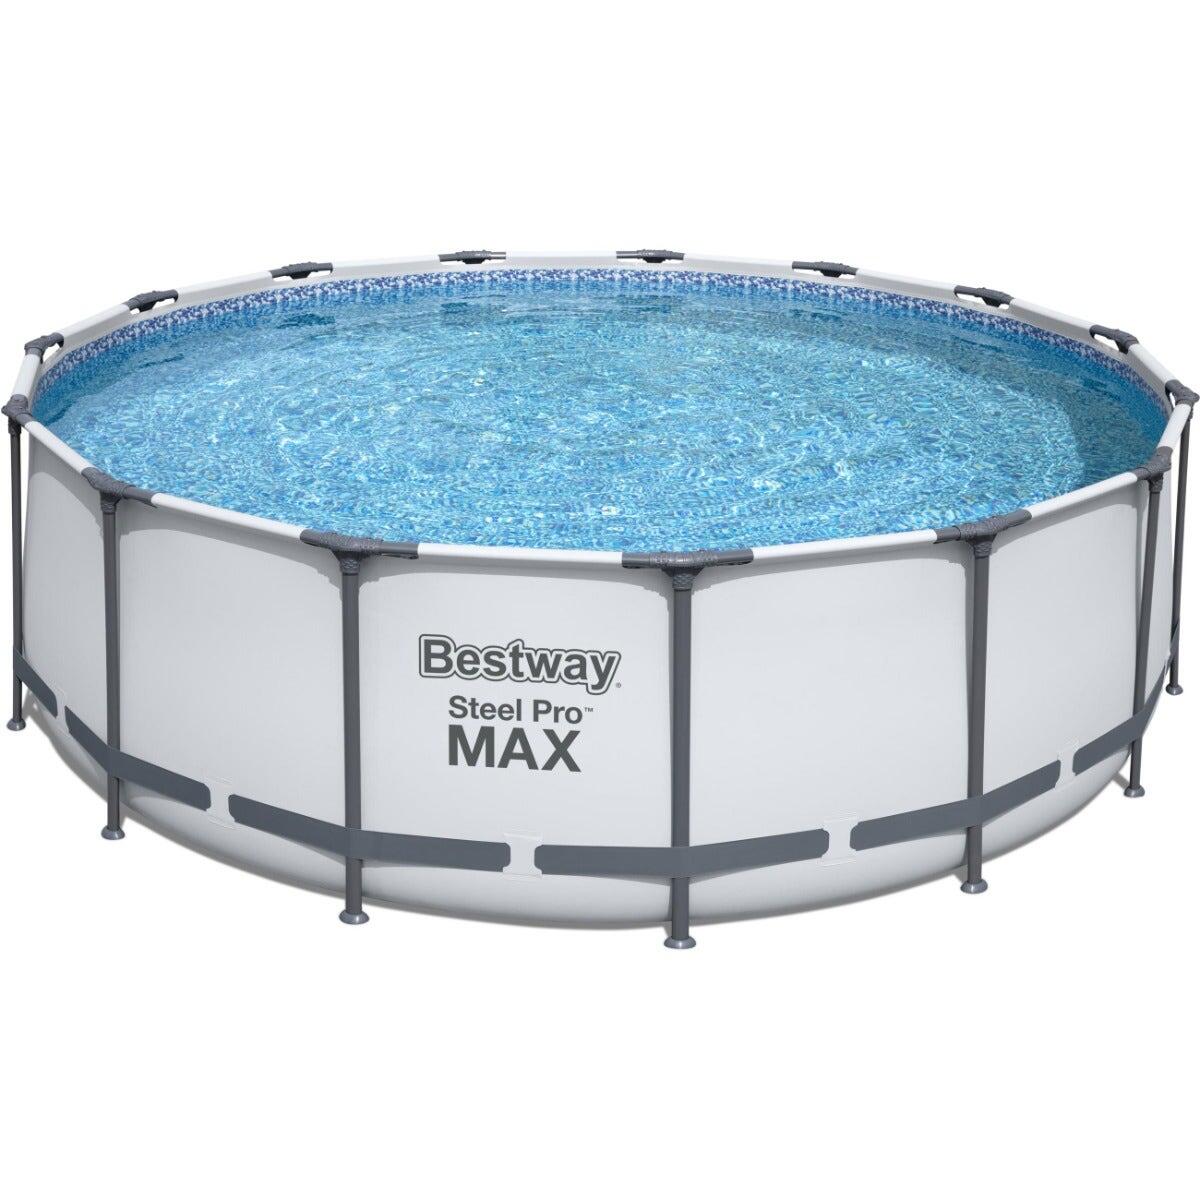 BESTWAY Bestway 15ft x 48" Steel Pro MAX Round Above Ground Swimming Pool